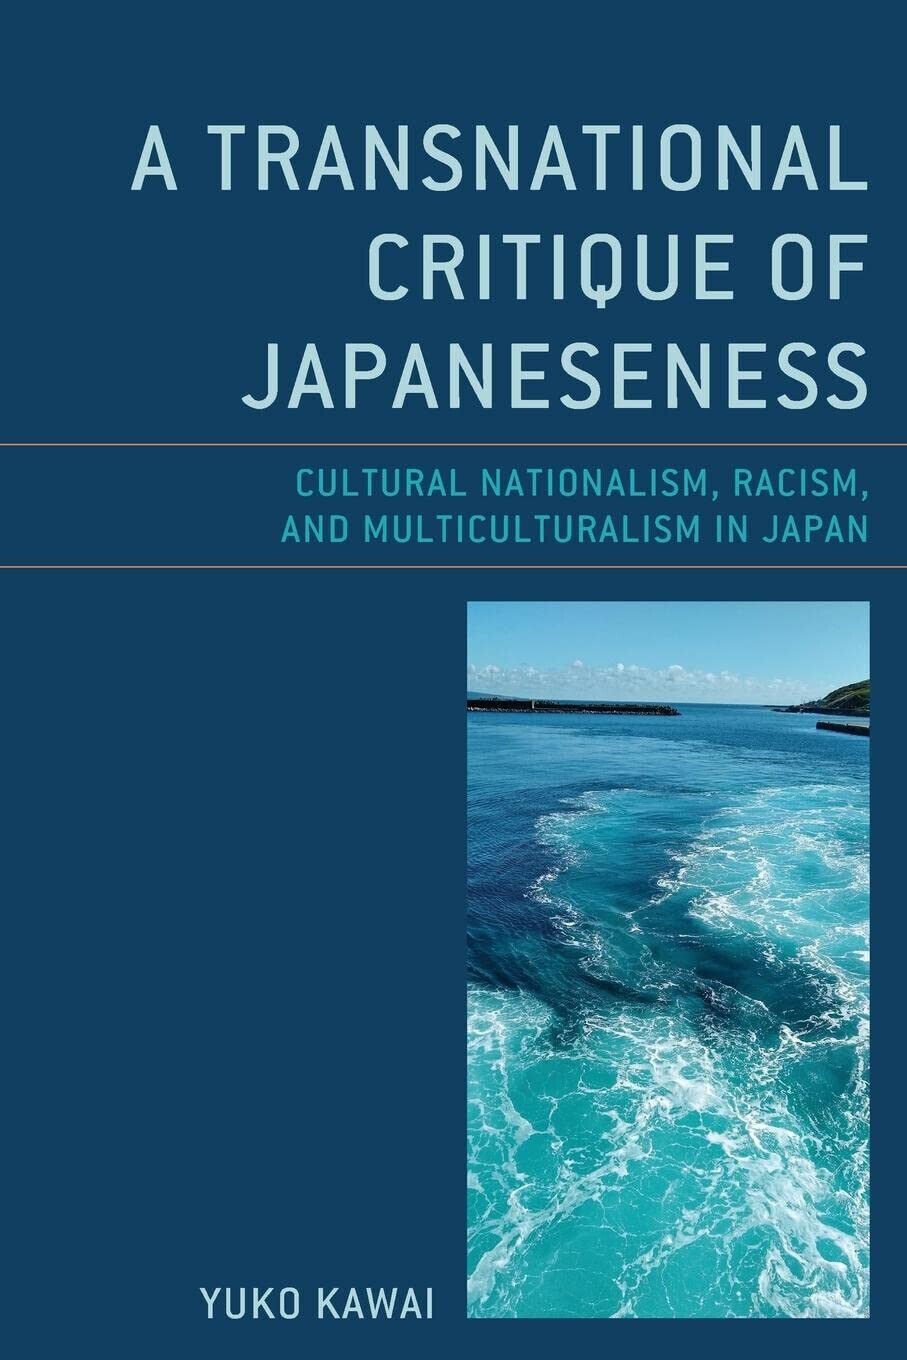 A Transnational Critique of Japaneseness - Yuko Kawai - Lexington, 2022